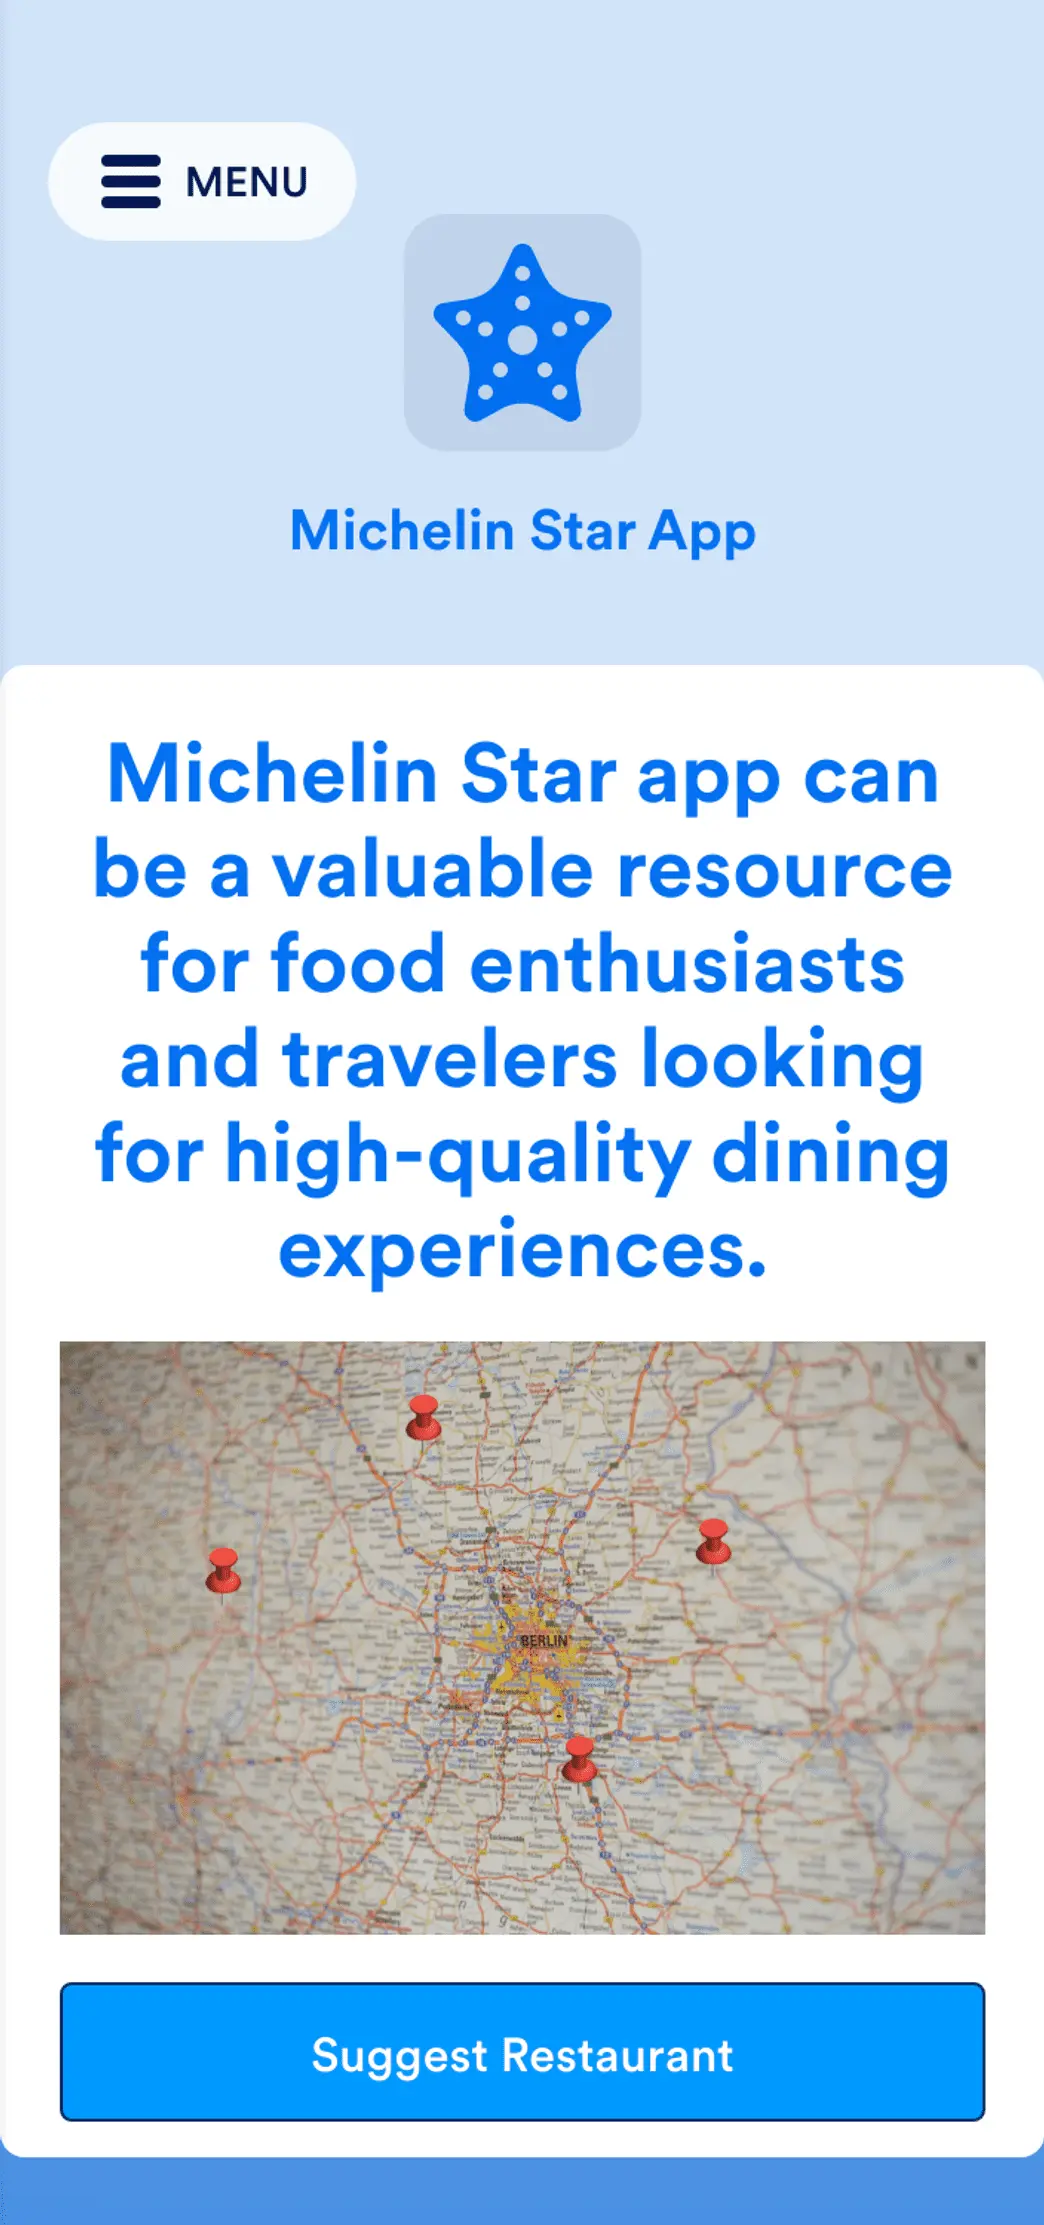 Michelin Star App